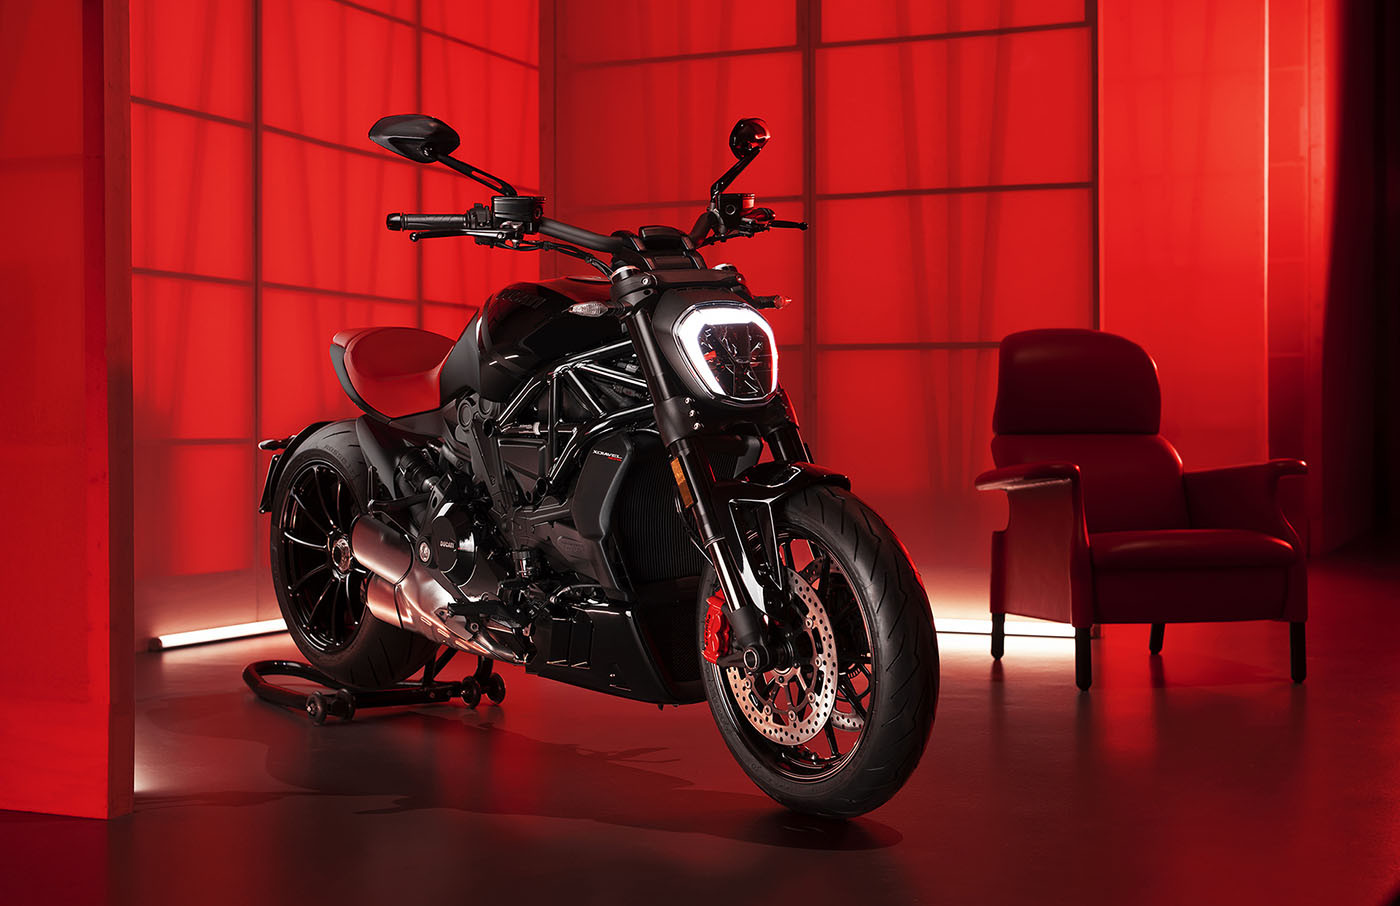 Ducati XDiavel Nera: μια ιδιαίτερη μοτοσικλέτα “Made in Italy”